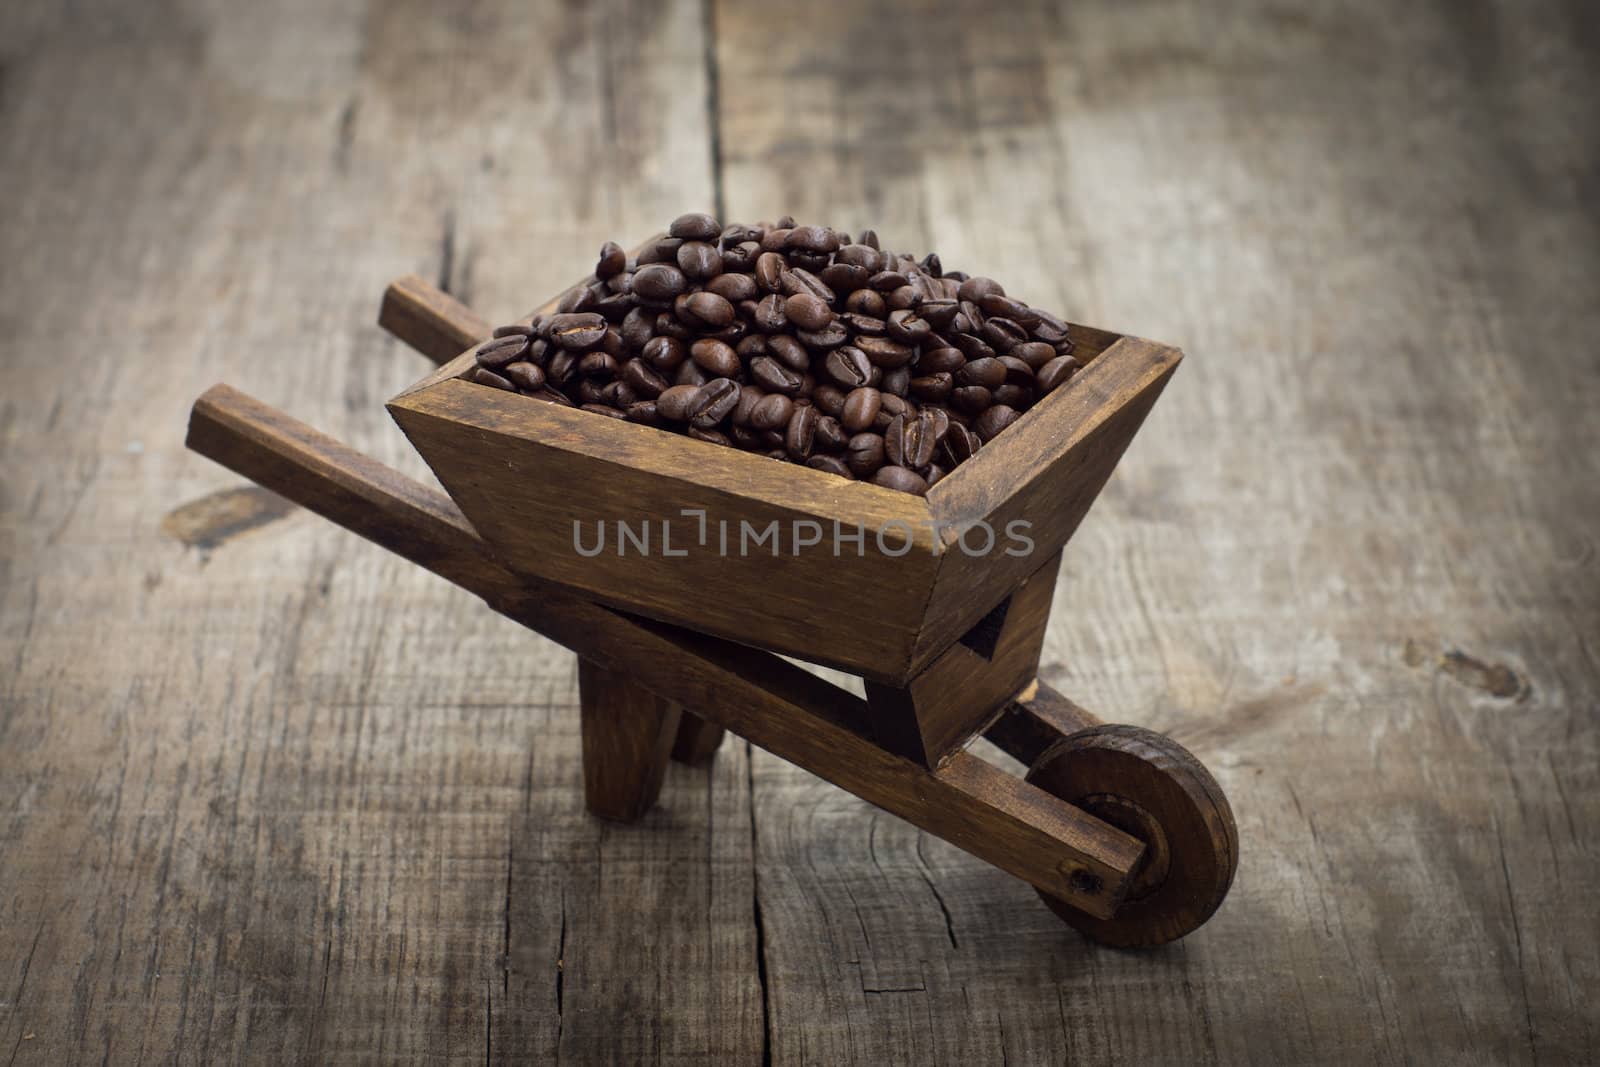 A wheelbarrow full of coffee beans on wood background